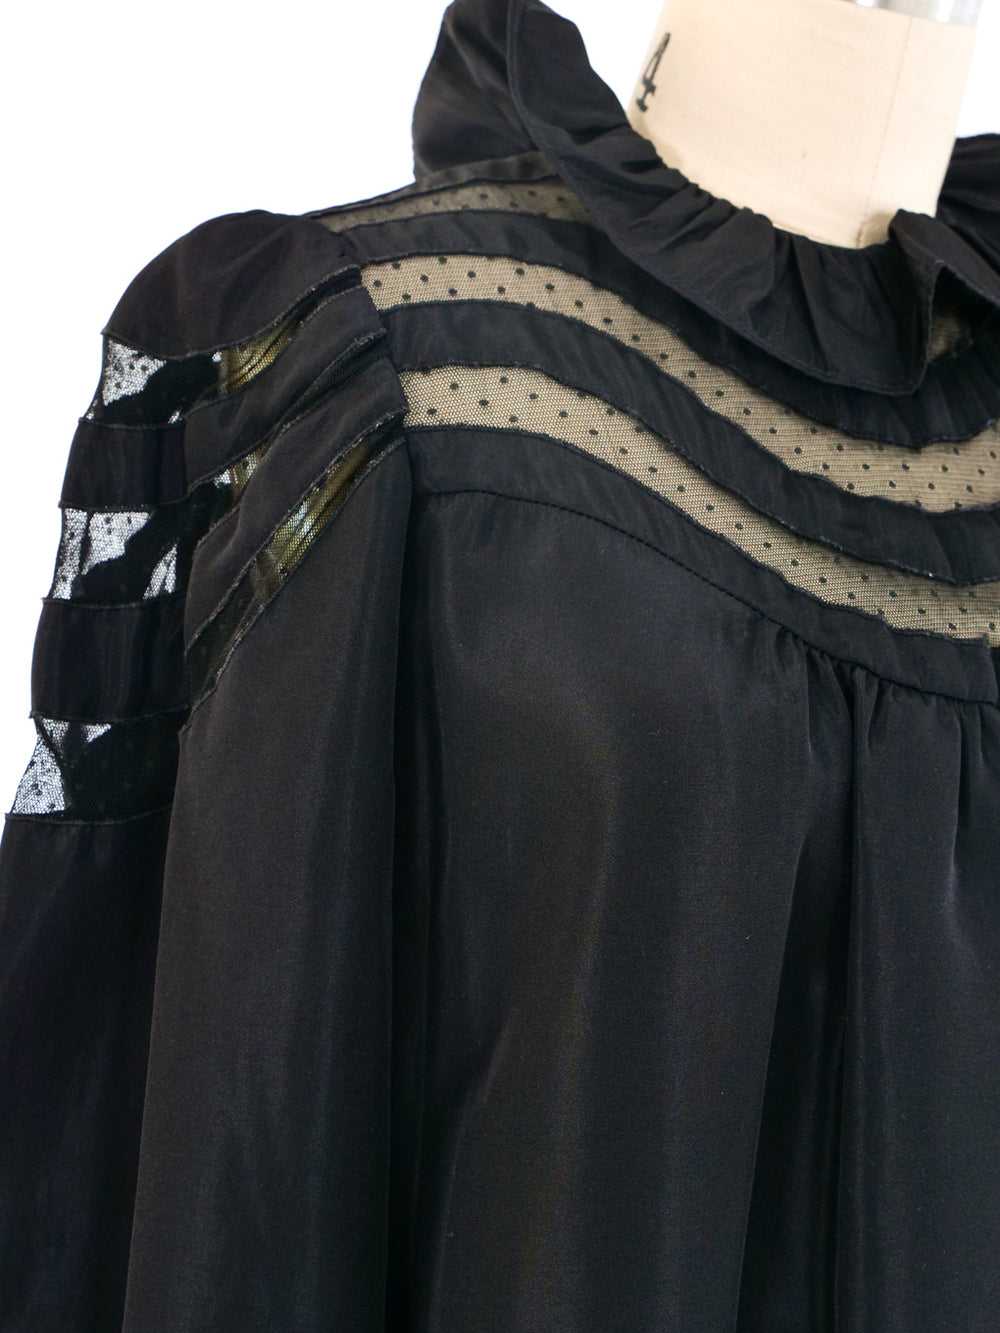 Christian Dior Taffeta Nightgown - image 3